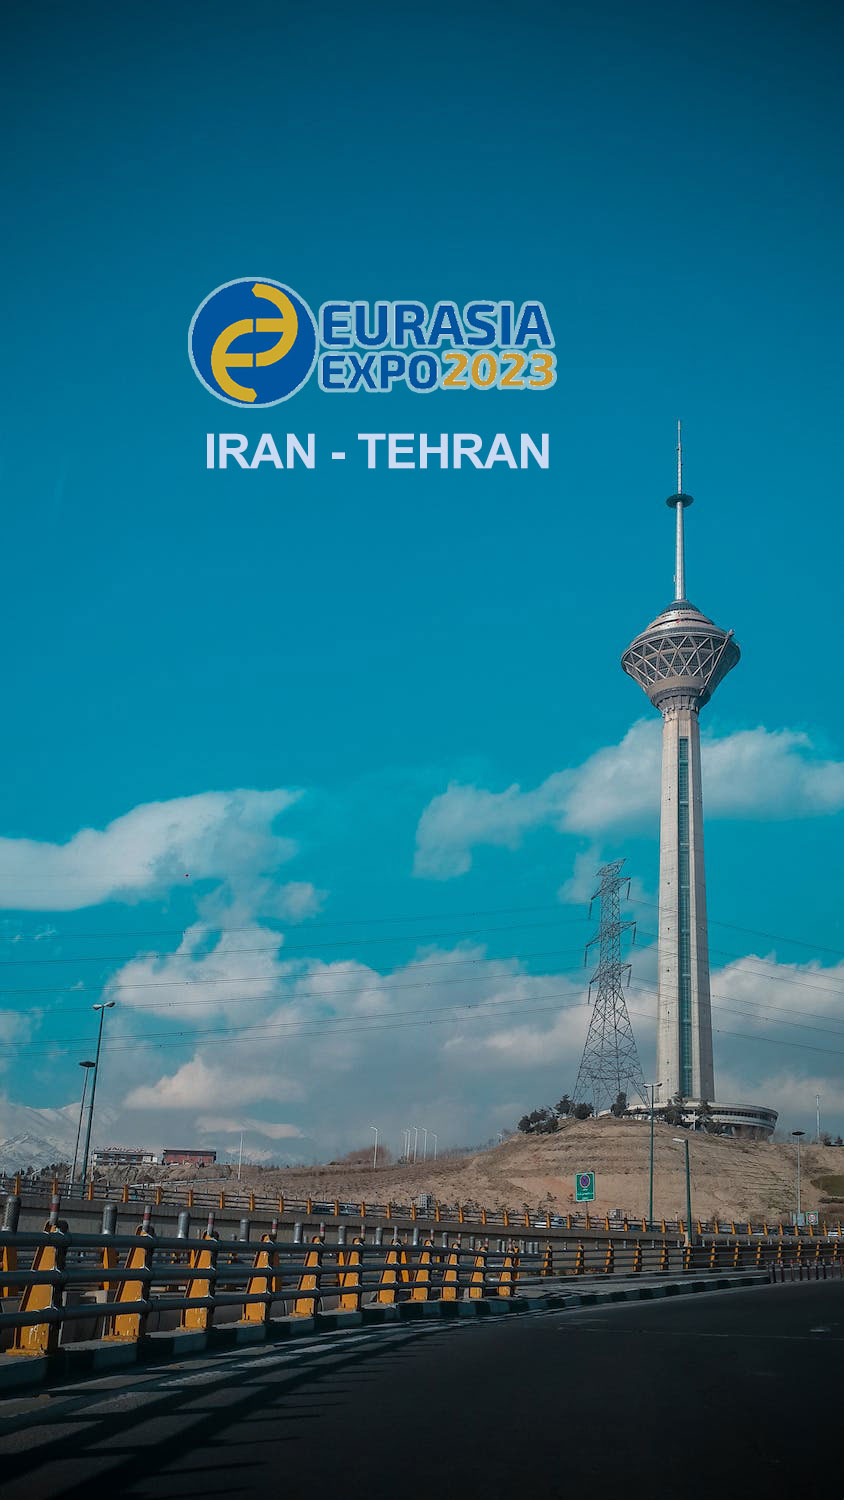 IRAN TEHRAN - The 2nd International Eurasia Exhibition 2023 in Iran/Tehran